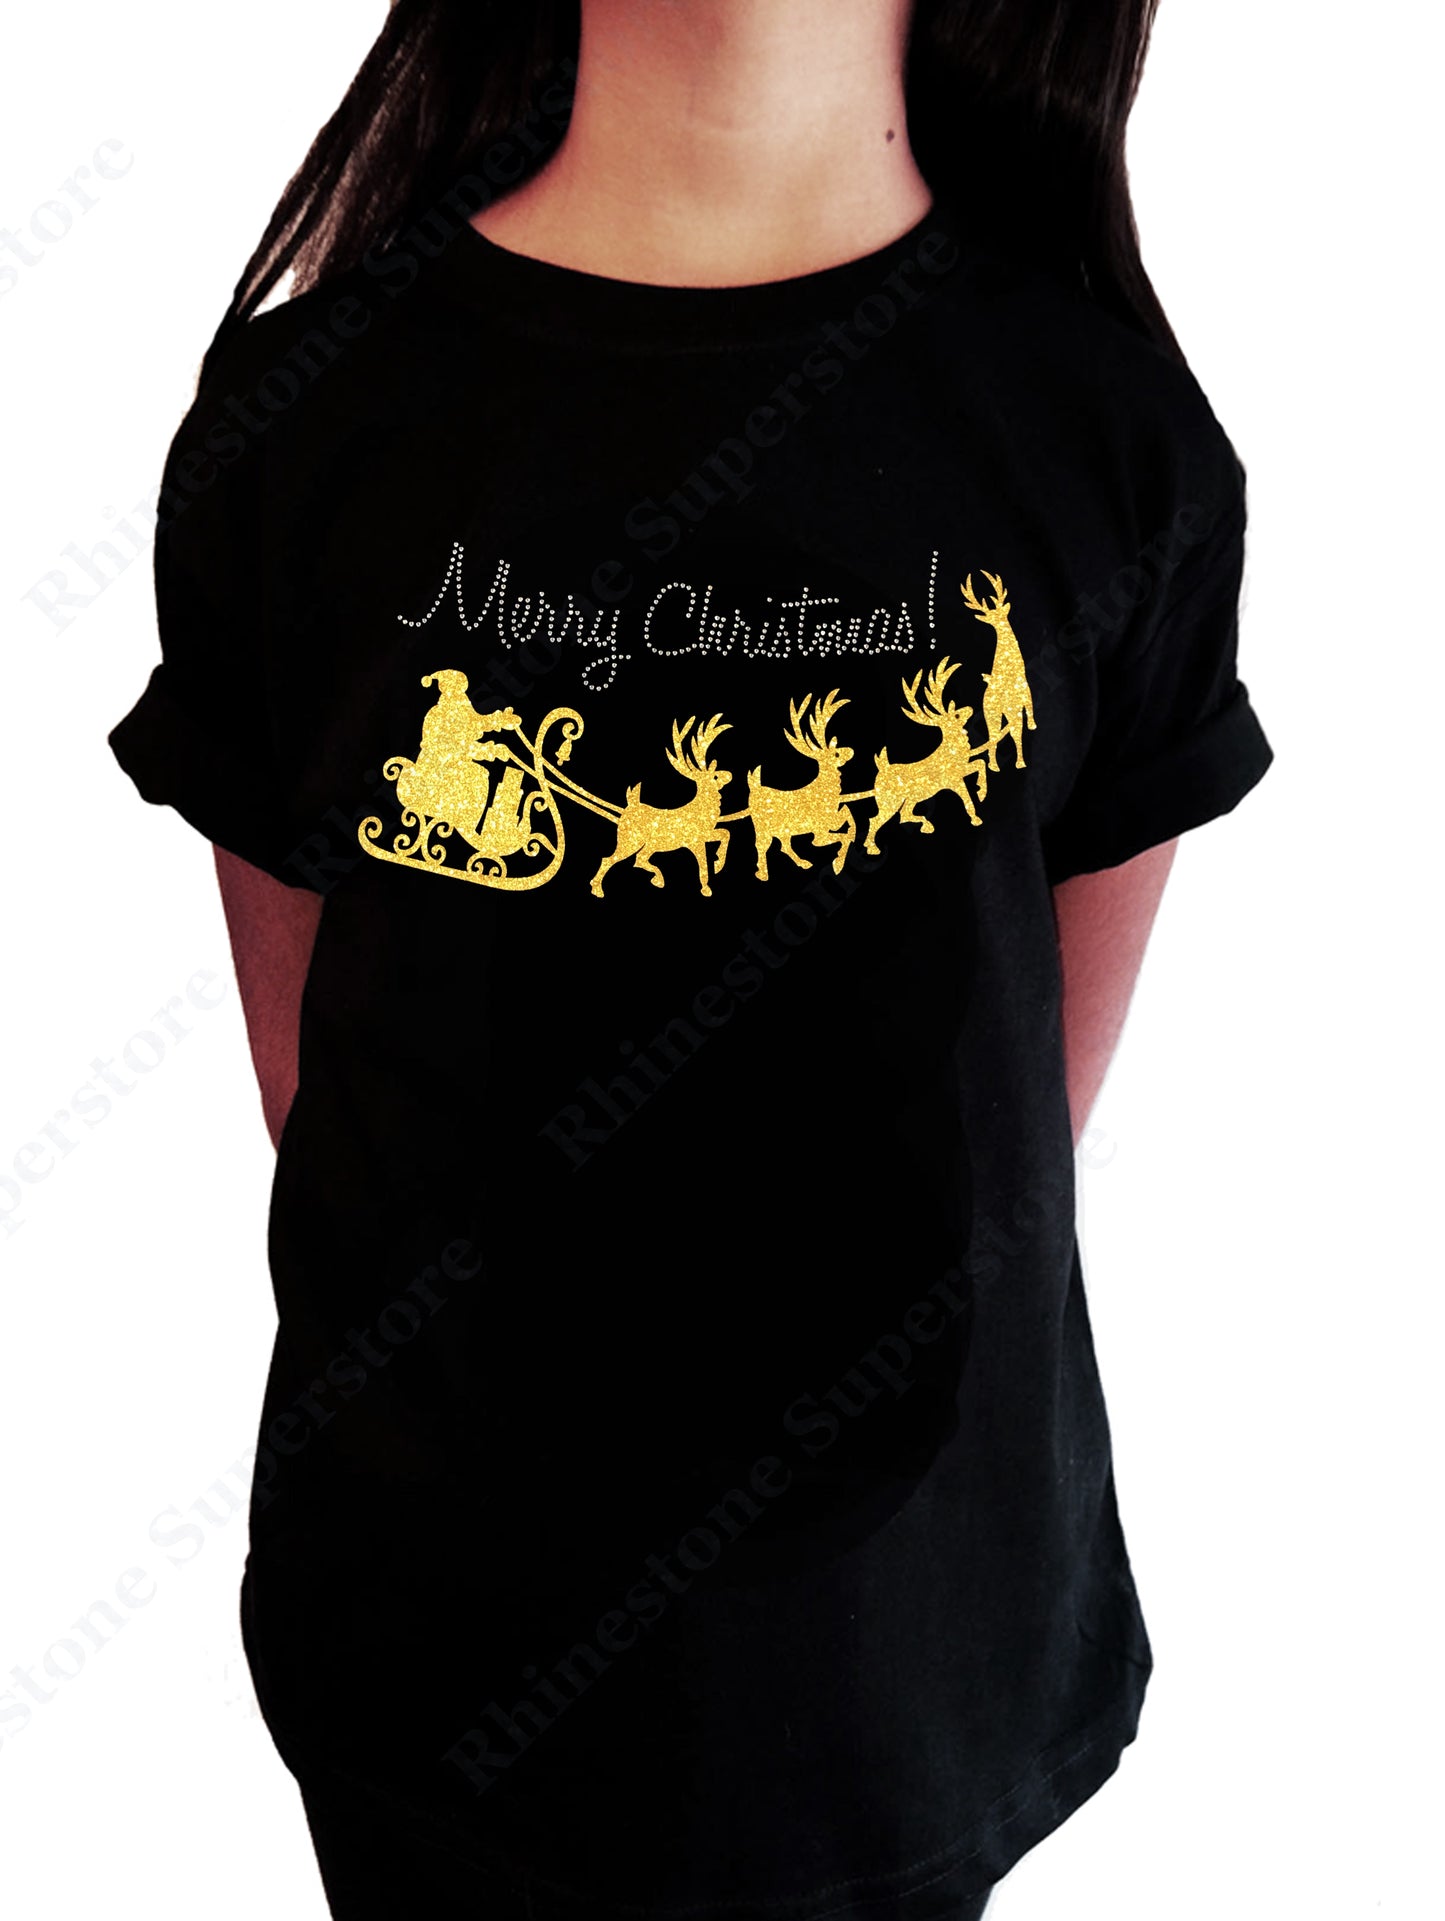 Merry Christmas with Yellow Santa Sleigh in Glitters and Rhinestones Girls